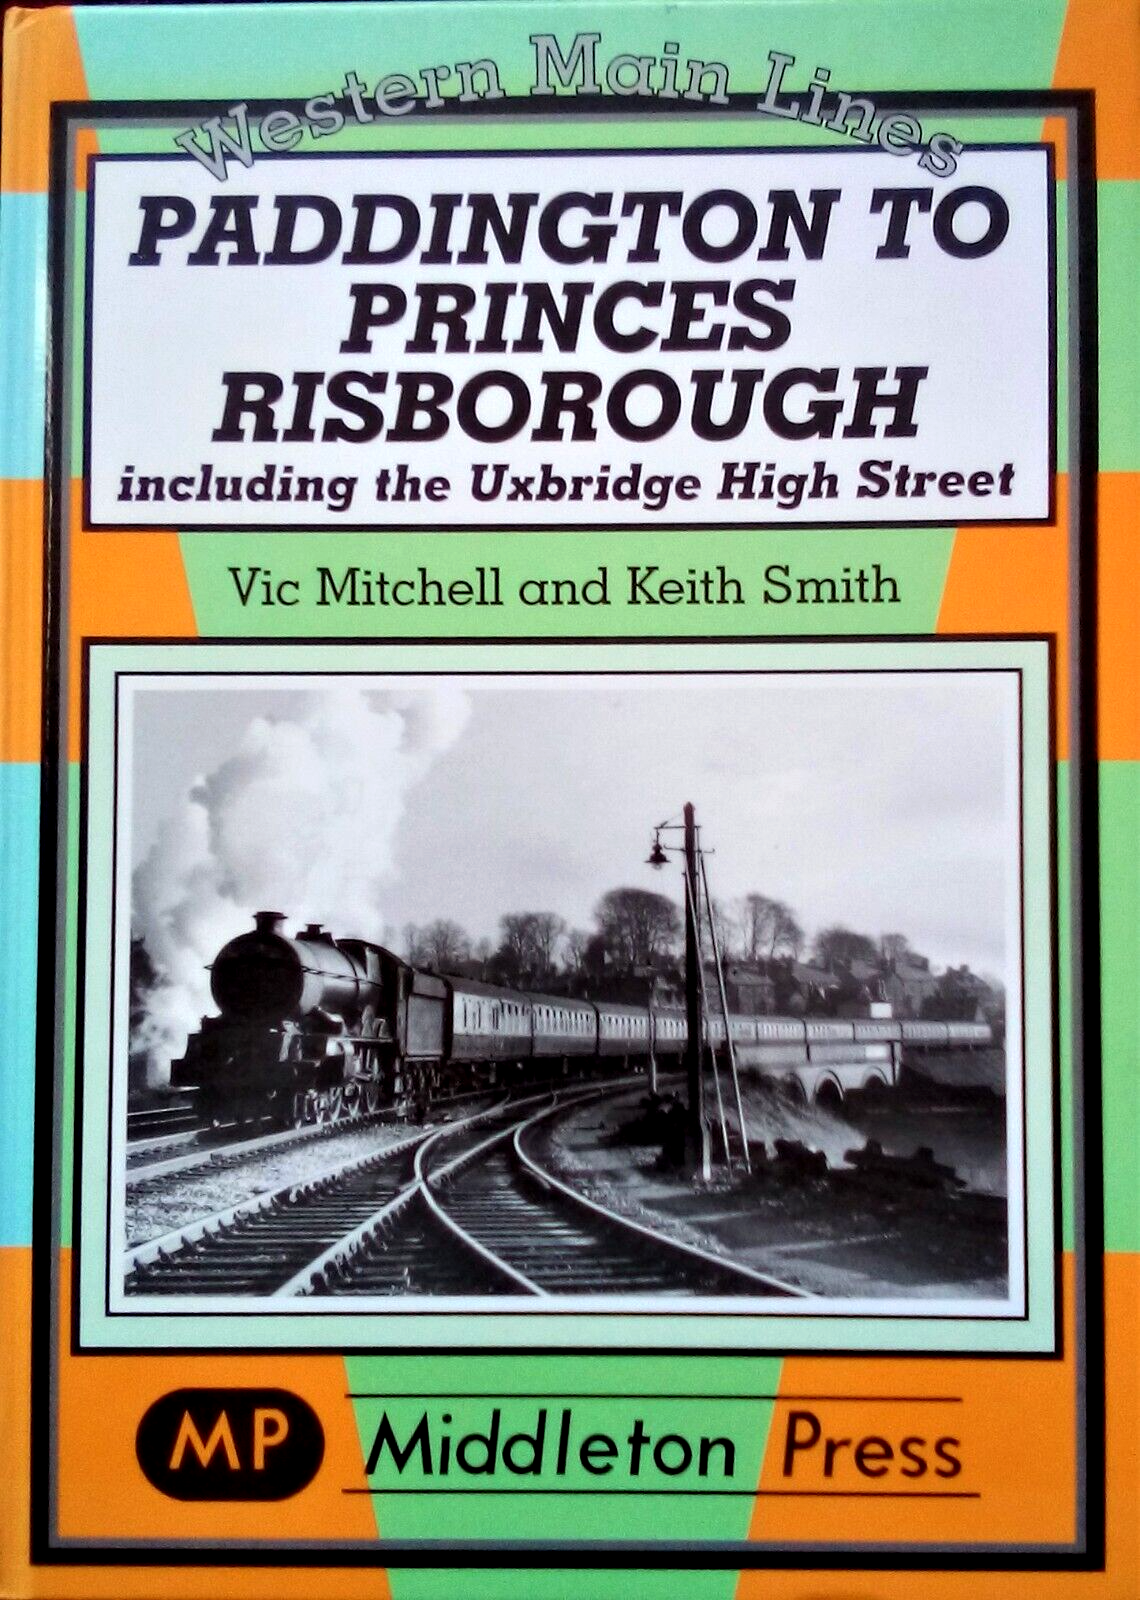 Western Main Lines Paddington to Princes Risborough including Uxbridge High Street Branch